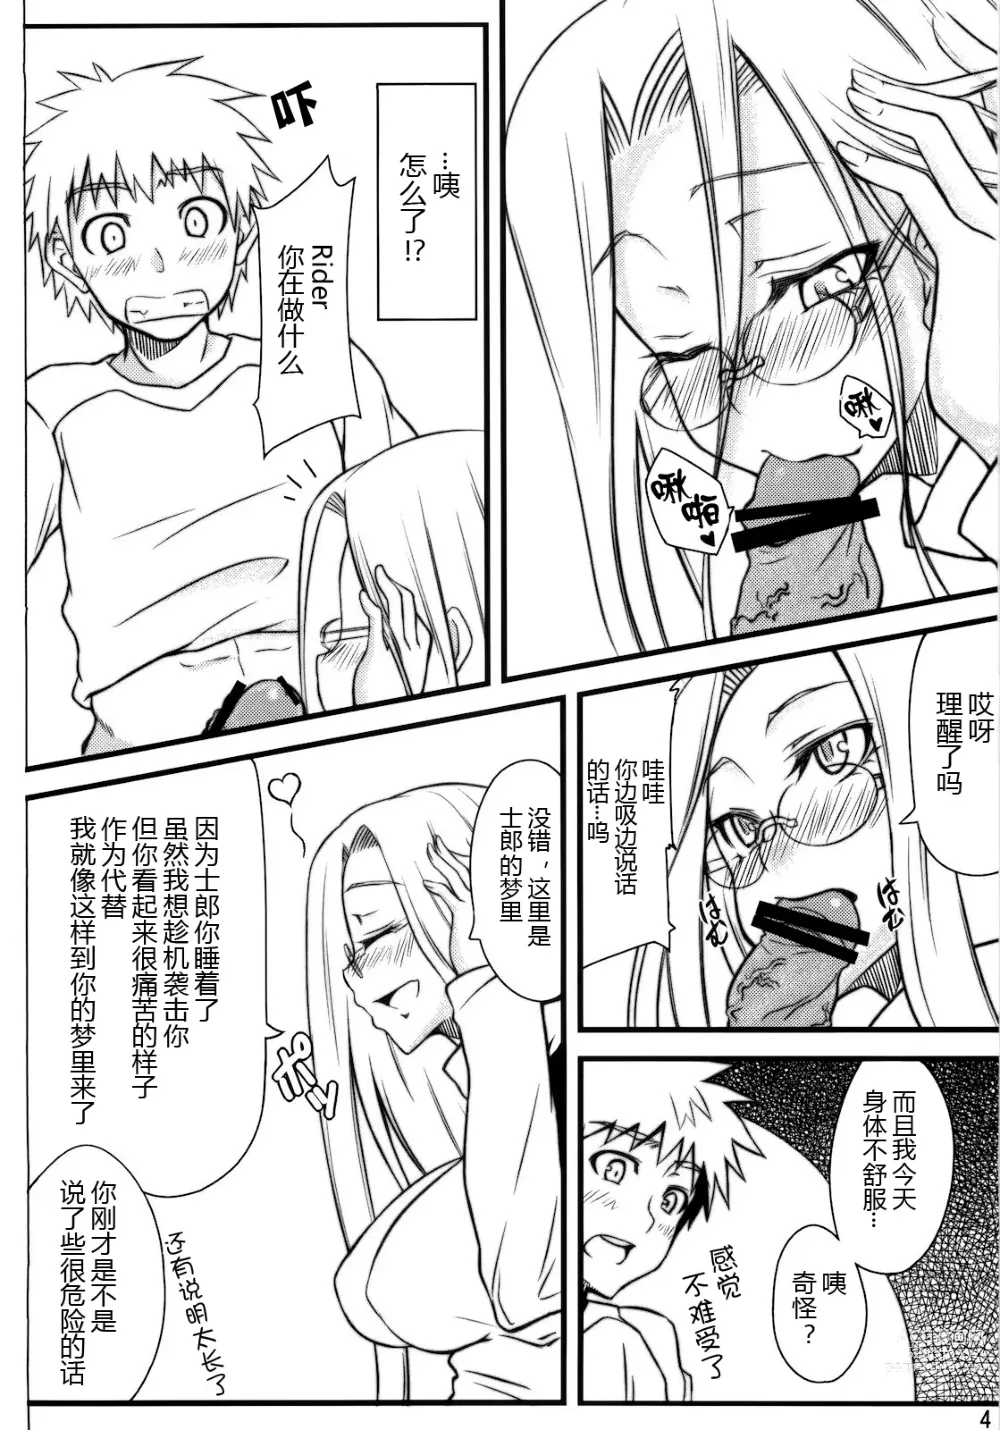 Page 4 of doujinshi R5